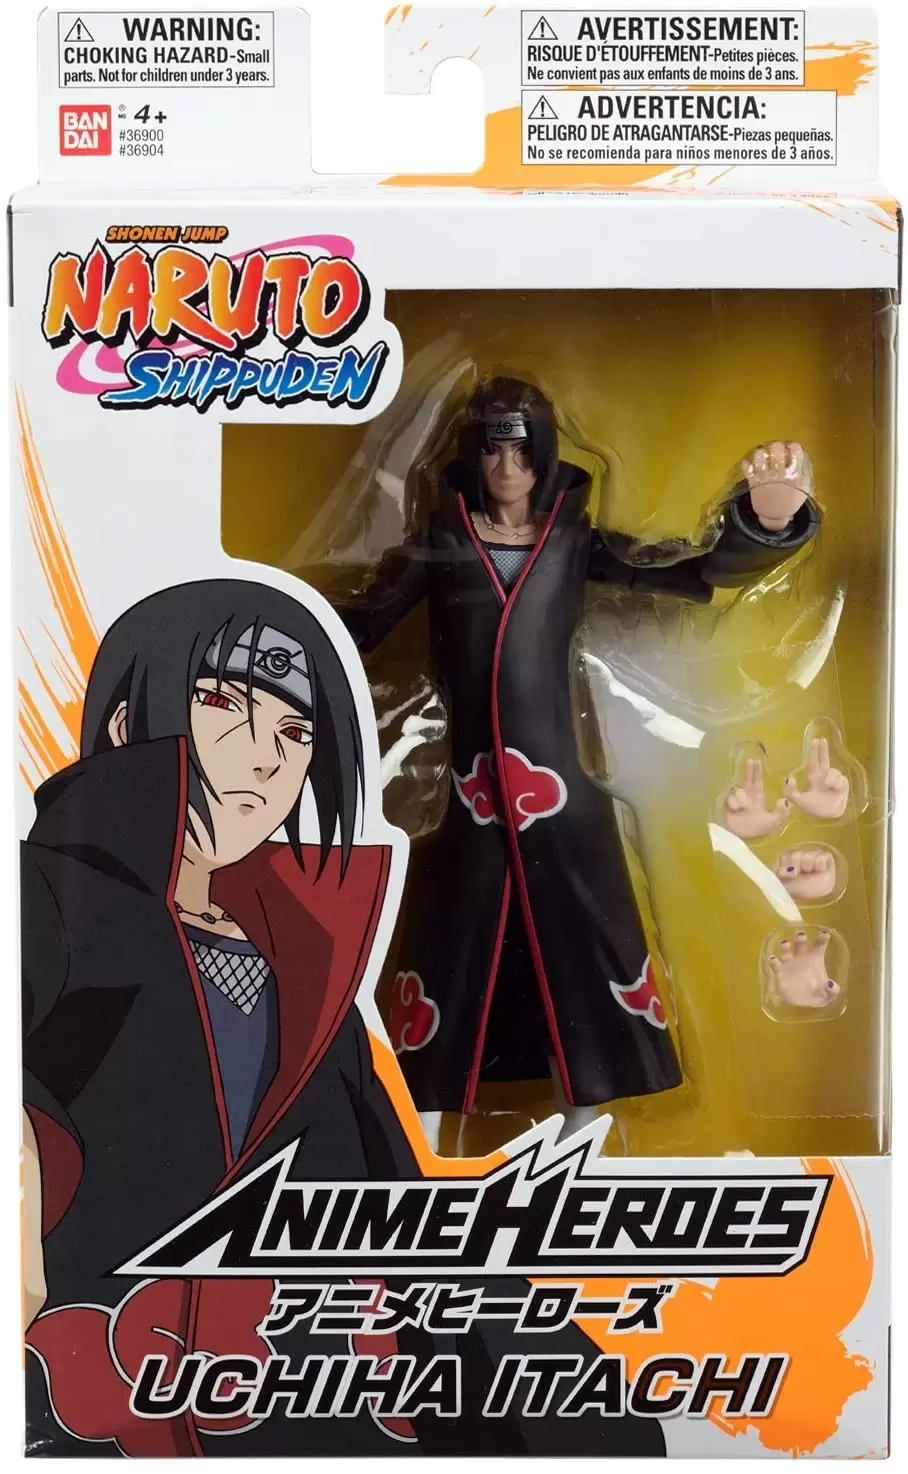 Naruto Shippuden - Uchiha Itachi - Anime Heroes - Bandai action figure